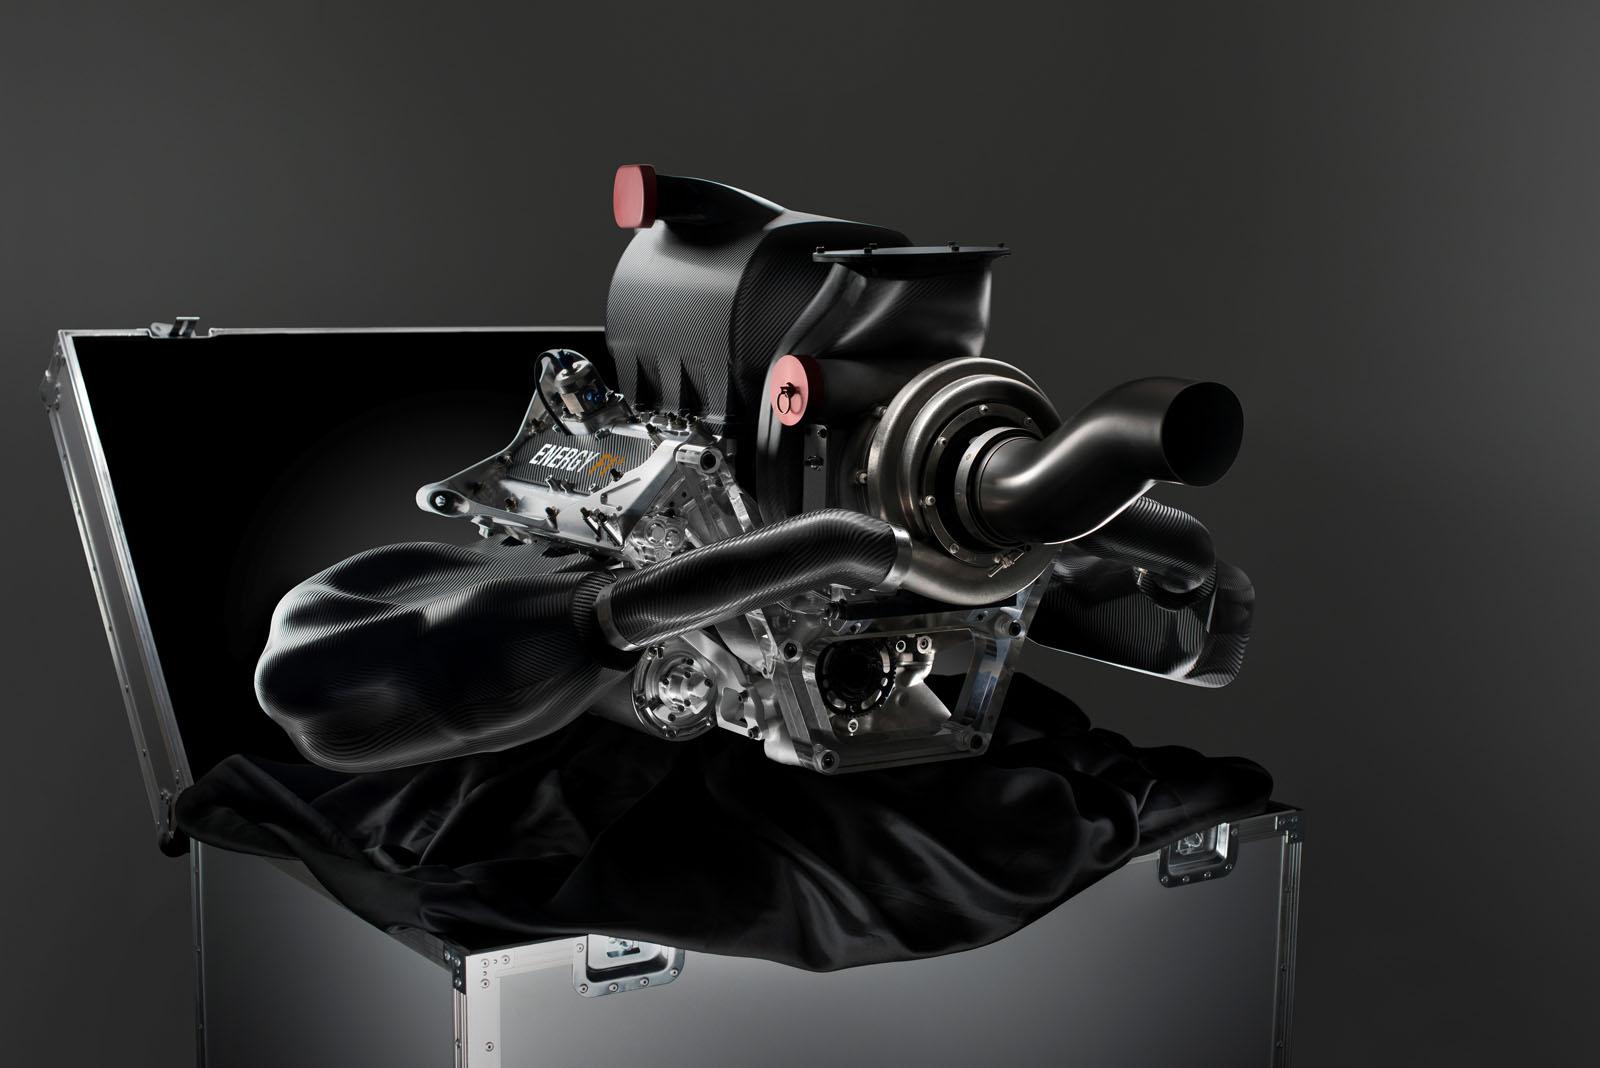 2014 Renault F1 1.6 V6 engine unveiled (video)